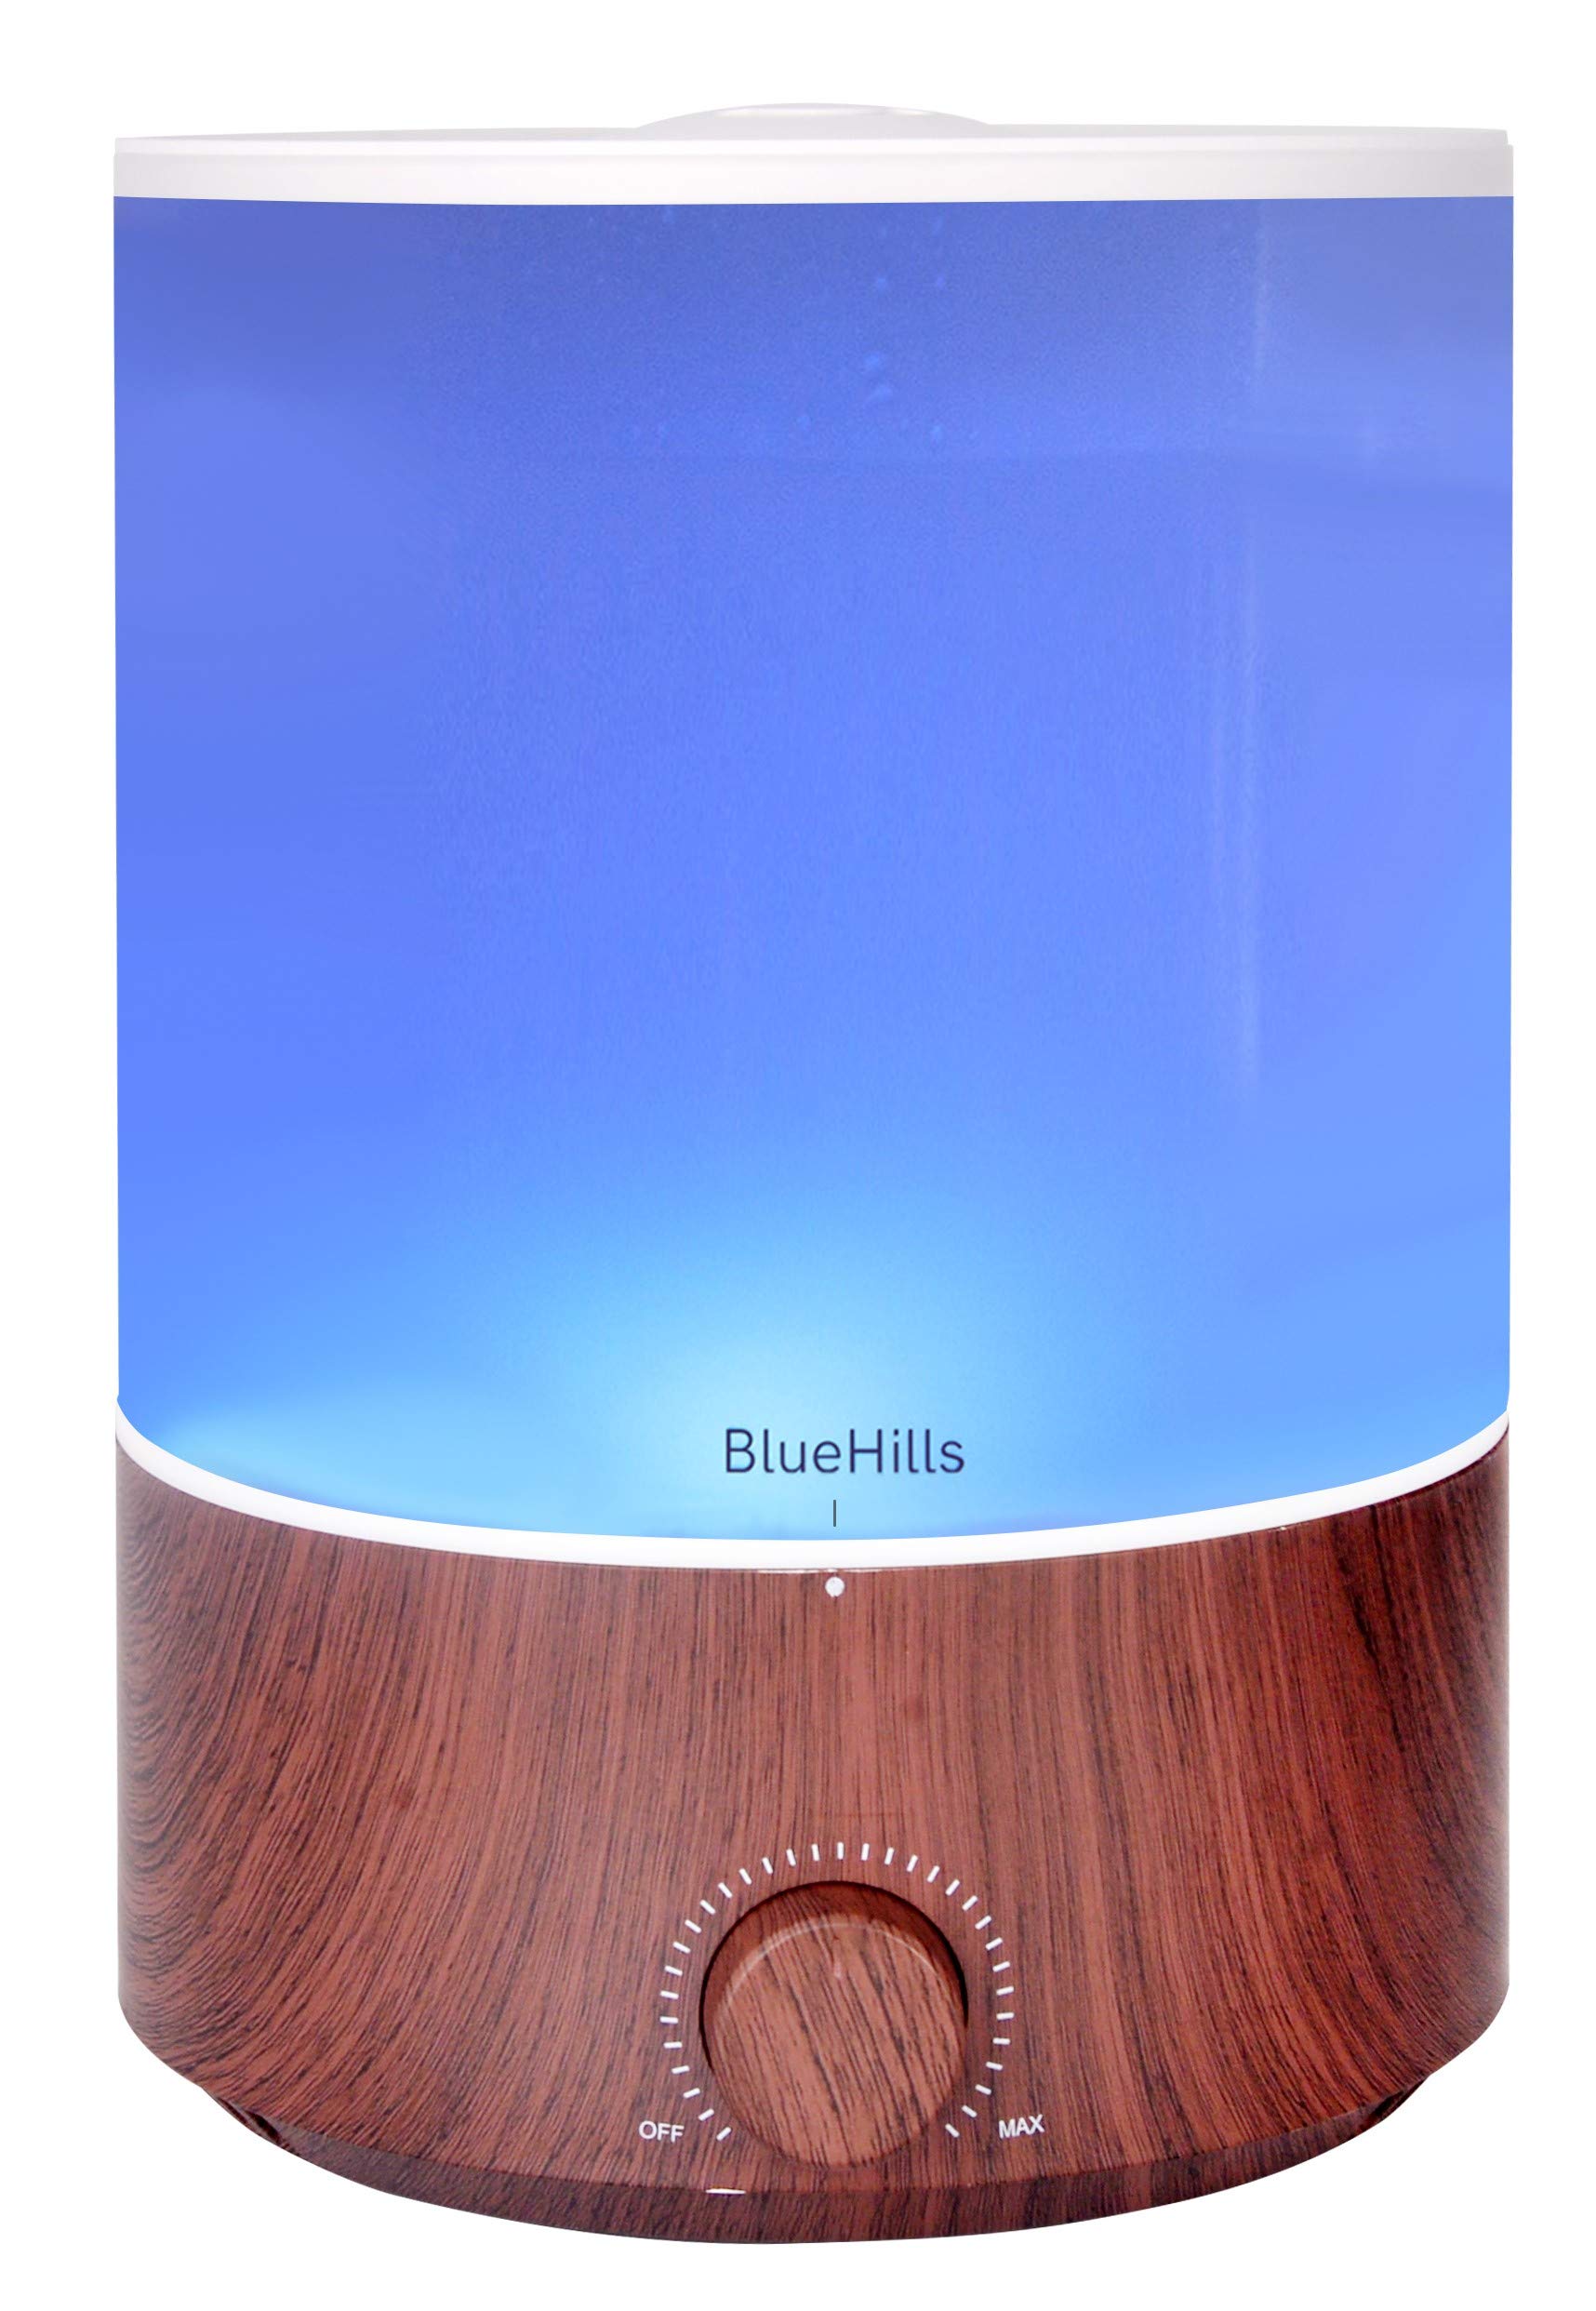 BlueHills 2000 ML Premium Essential Oil Diffuser Humidifier Extra Larg